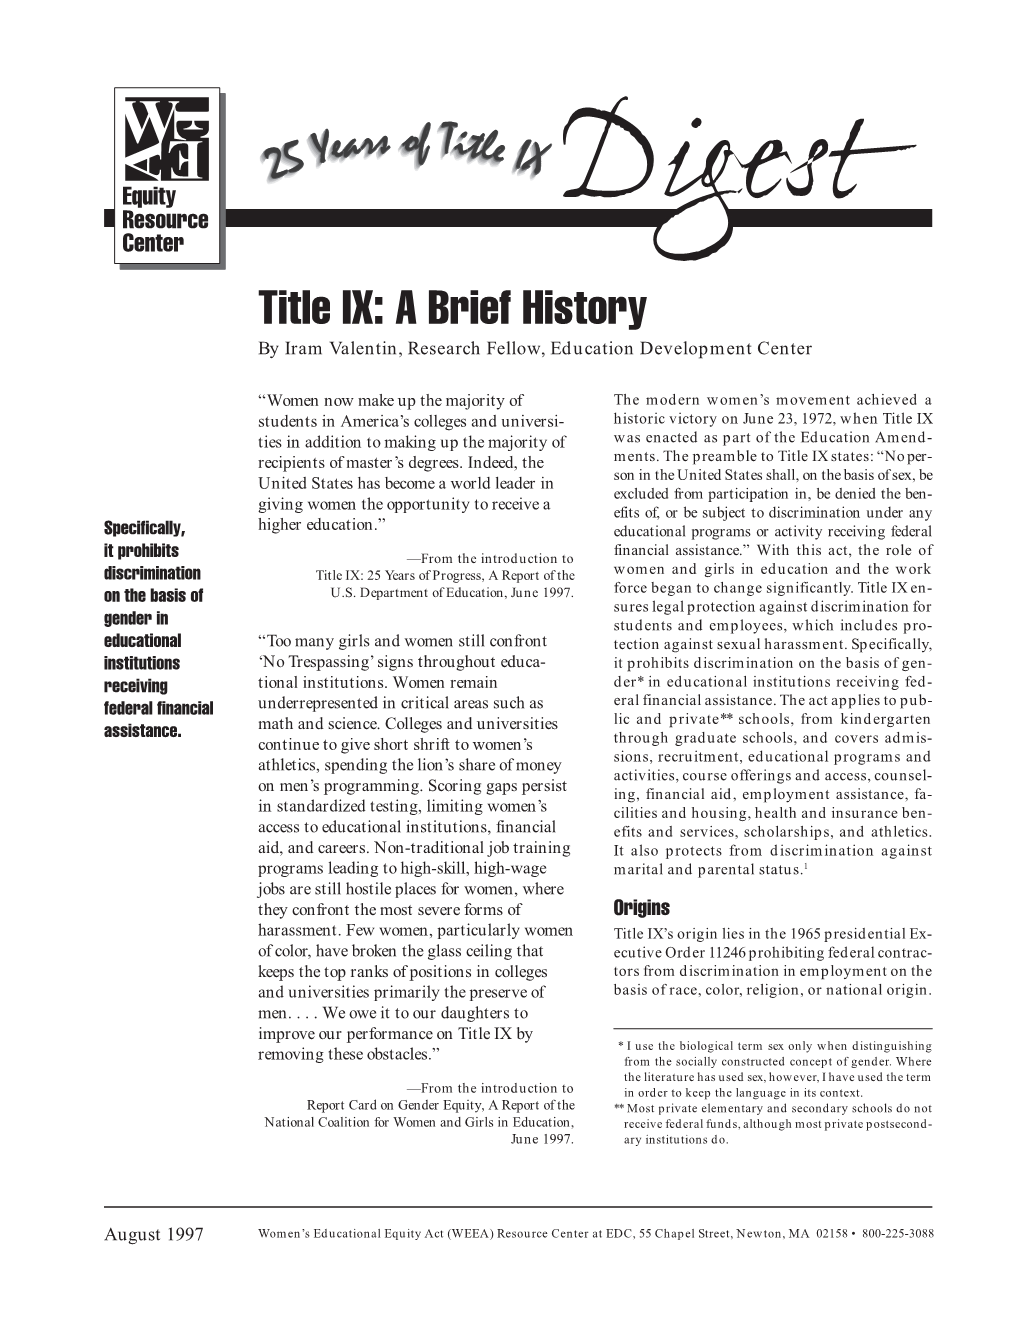 Title IX: a Brief History by Iram Valentin, Research Fellow, Education Development Center